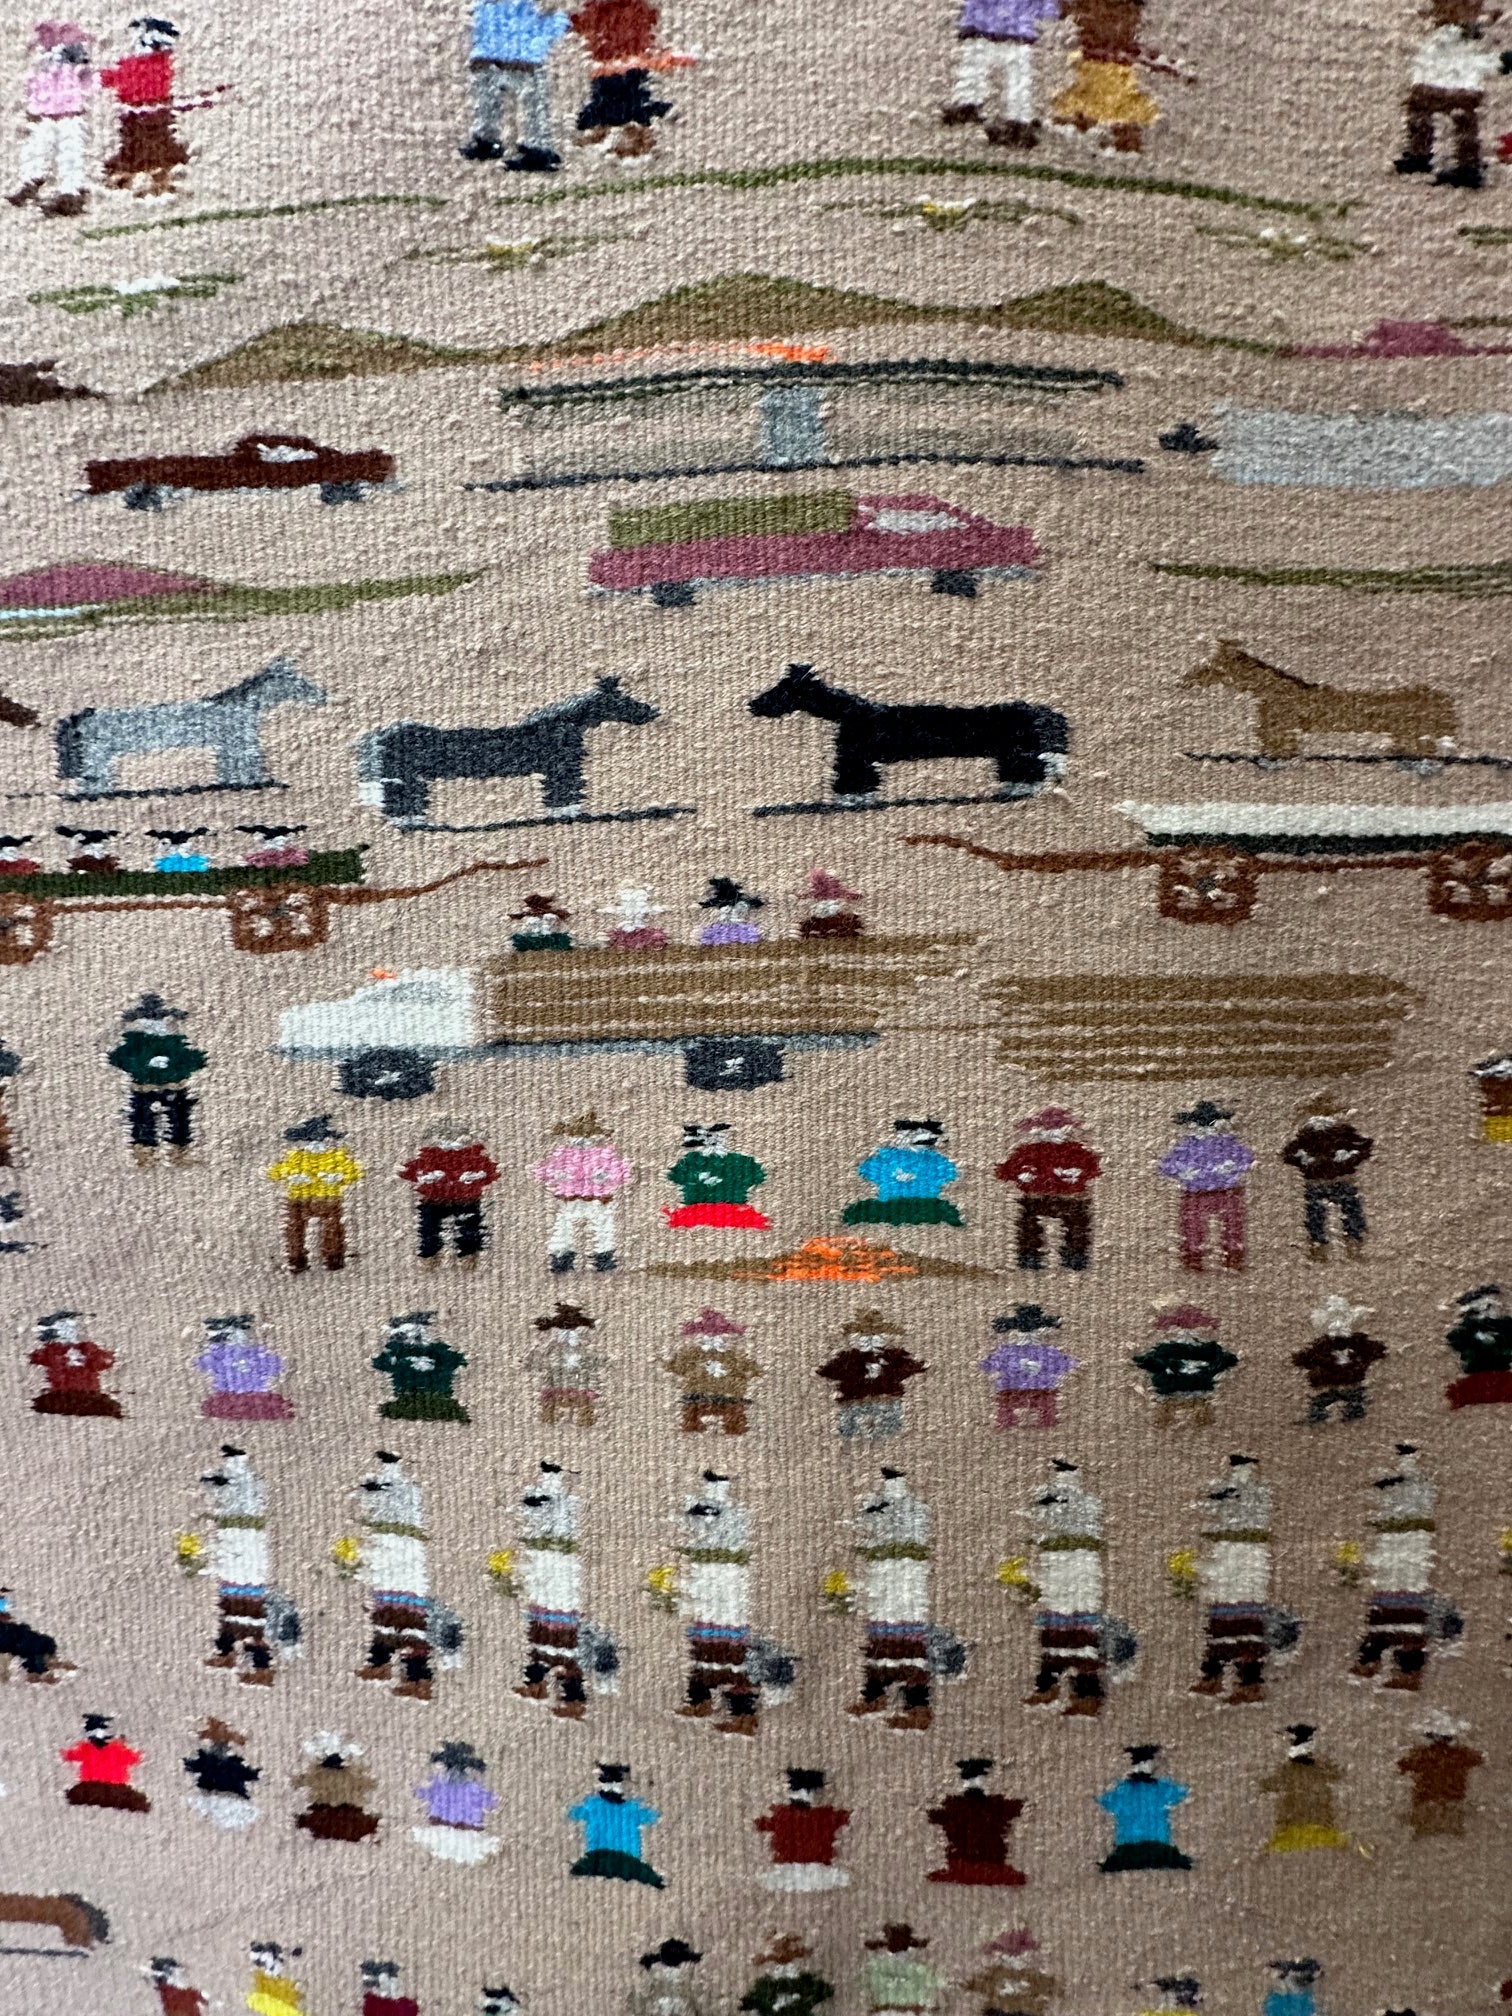 Pictorial Navajo Weaving for sale, navajo rug for sale, ceremony navajo weaving, telluride gallery